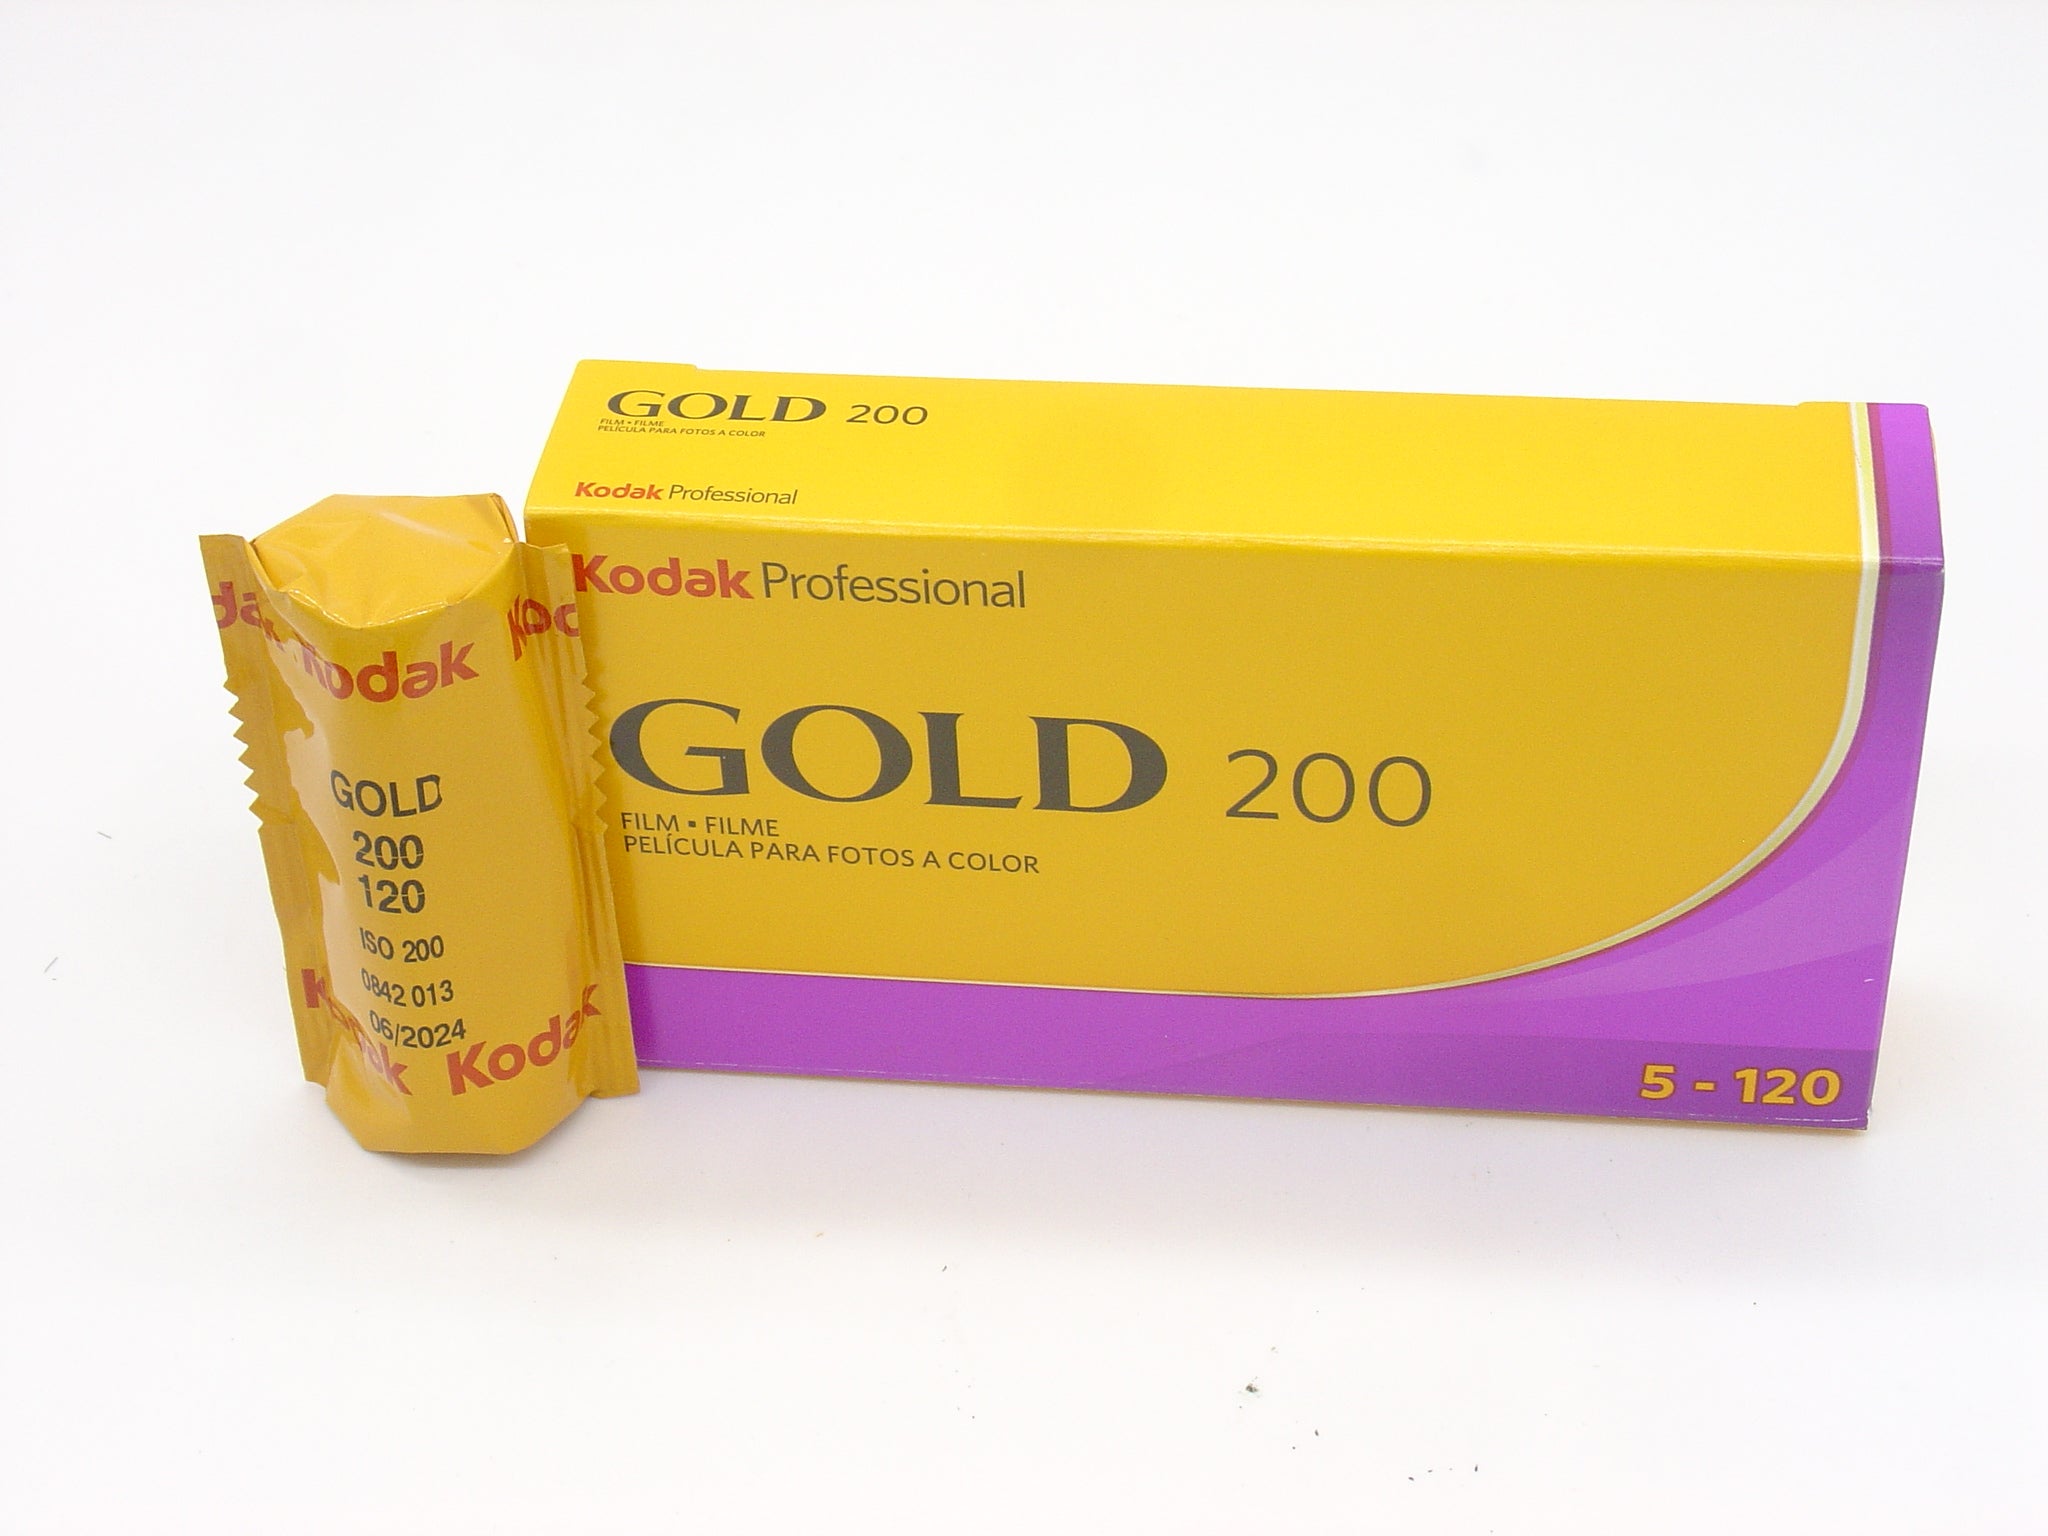 Kodak gold 120 1パック 200 ネガフィルム 5本 www.estrelaaltajf.com.br